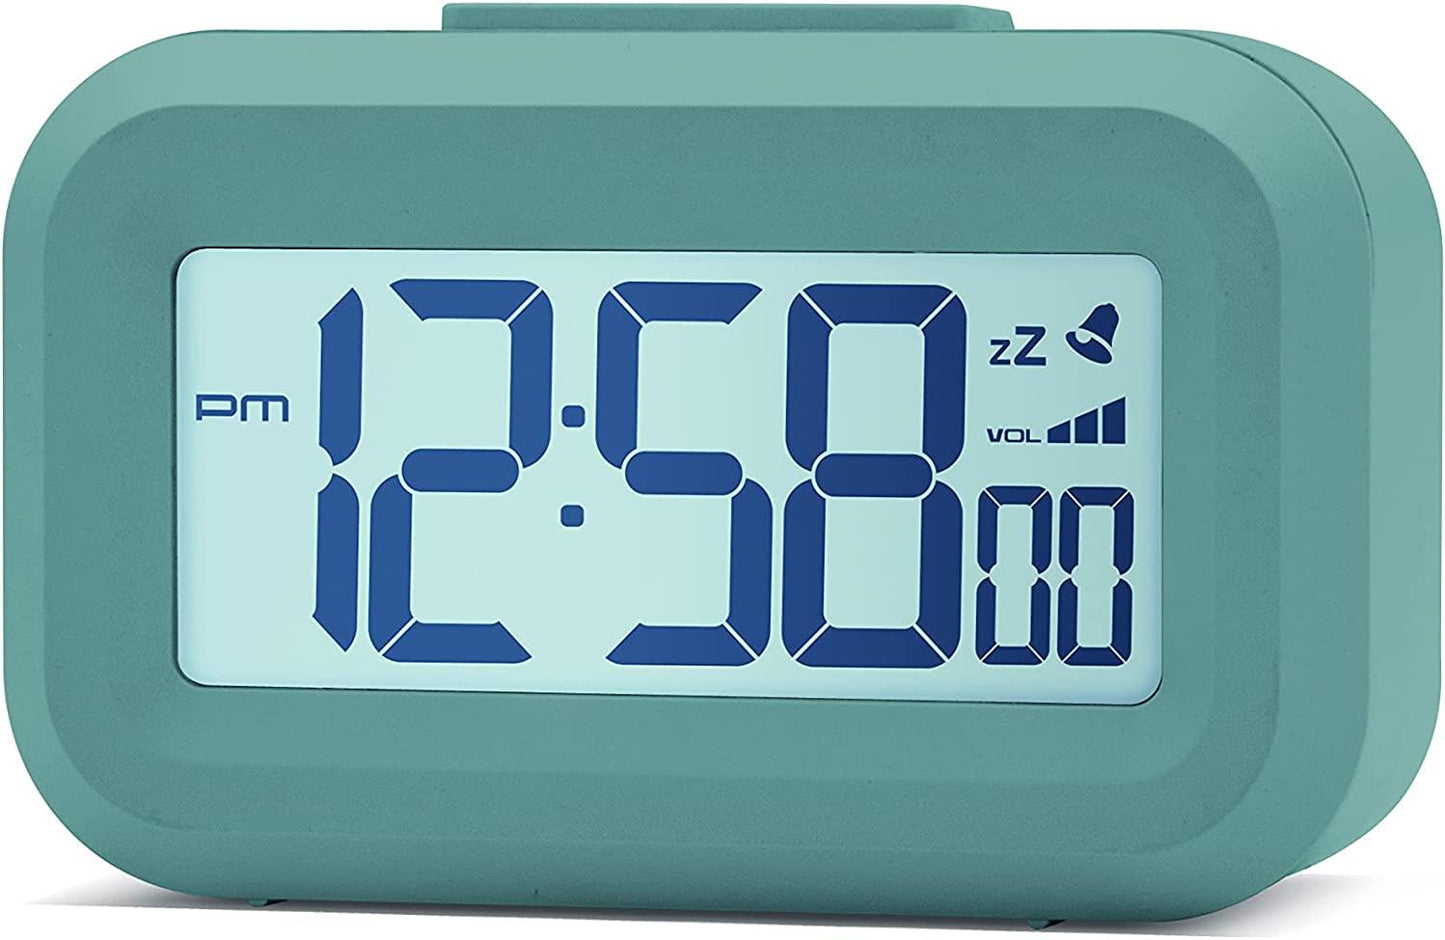 ACCTIM 'Kitto' LCD Digital Alarm Clock 9cm 1623 Available Multiple Colour